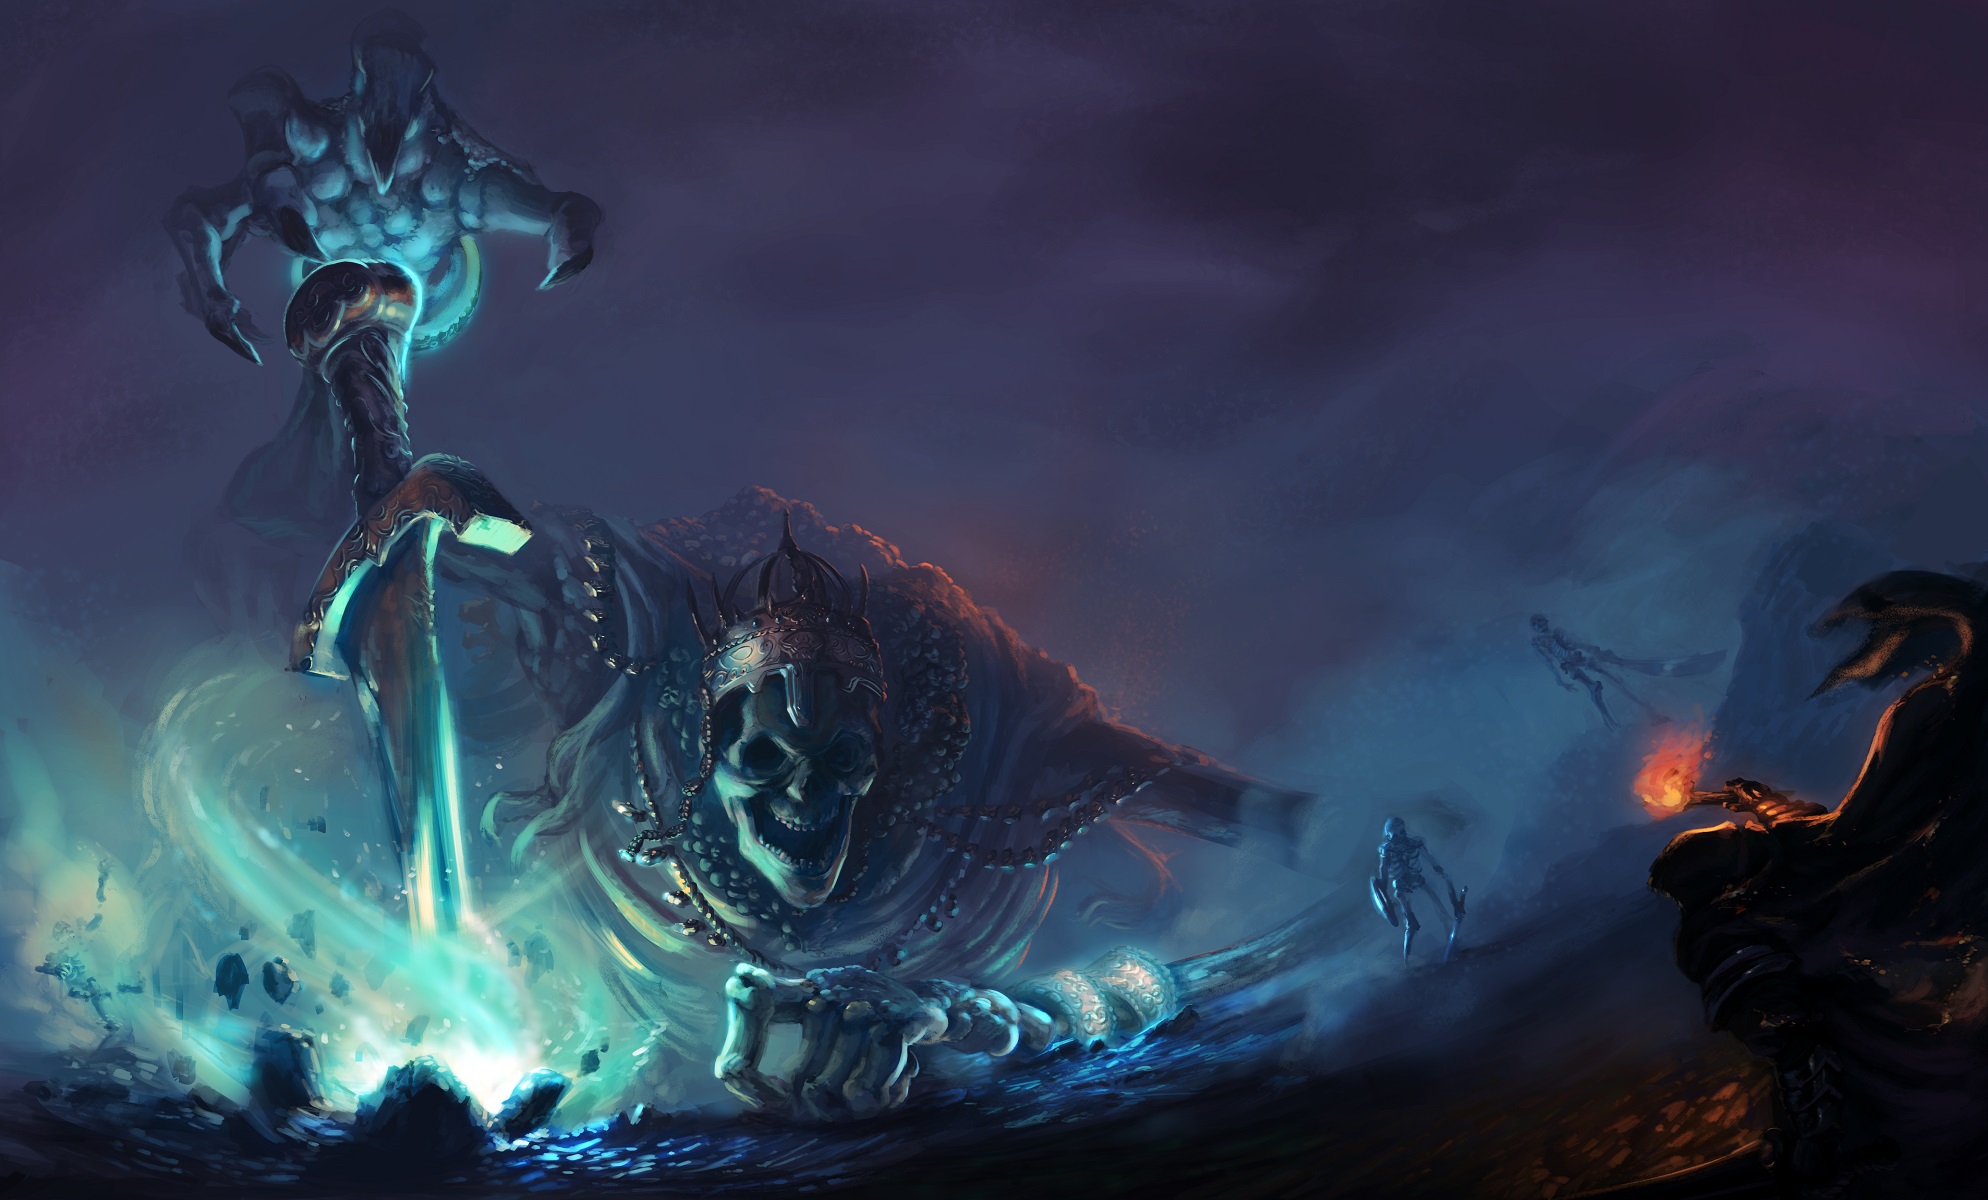 General 1988x1200 High Lord Wolnir Dark Souls Dark Souls III artwork fantasy art video games blue cyan